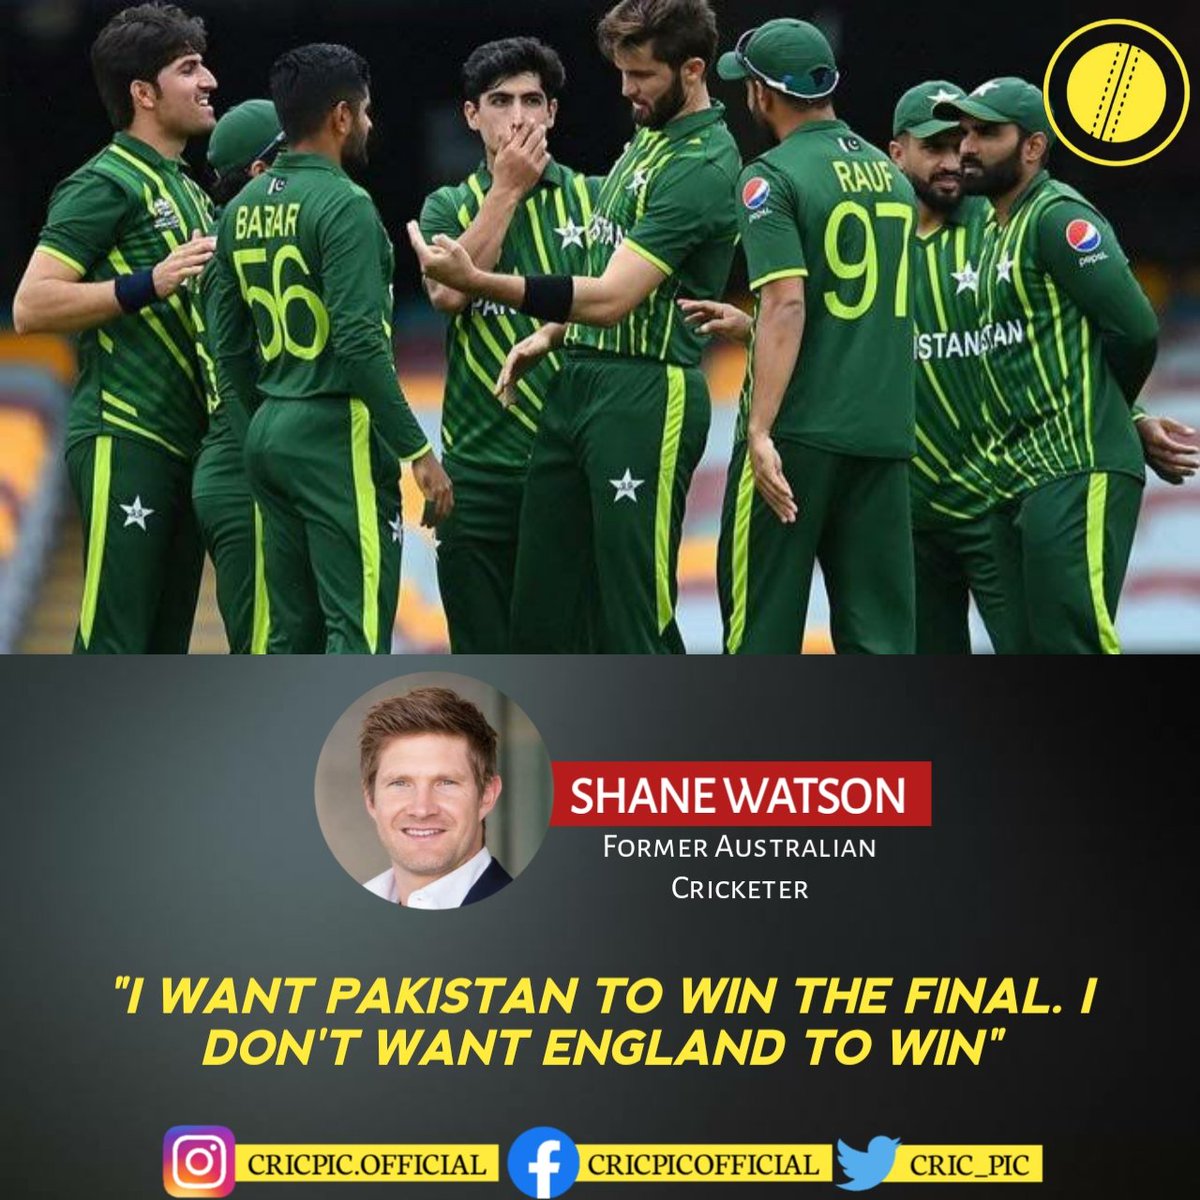 Shane Watson 'I want Pakistan to win the final. I don't want England to win.' #T20WorldCupFinal
#ShaneWatson #PakvEngFinal #T20WorldCup2022 #CricPic